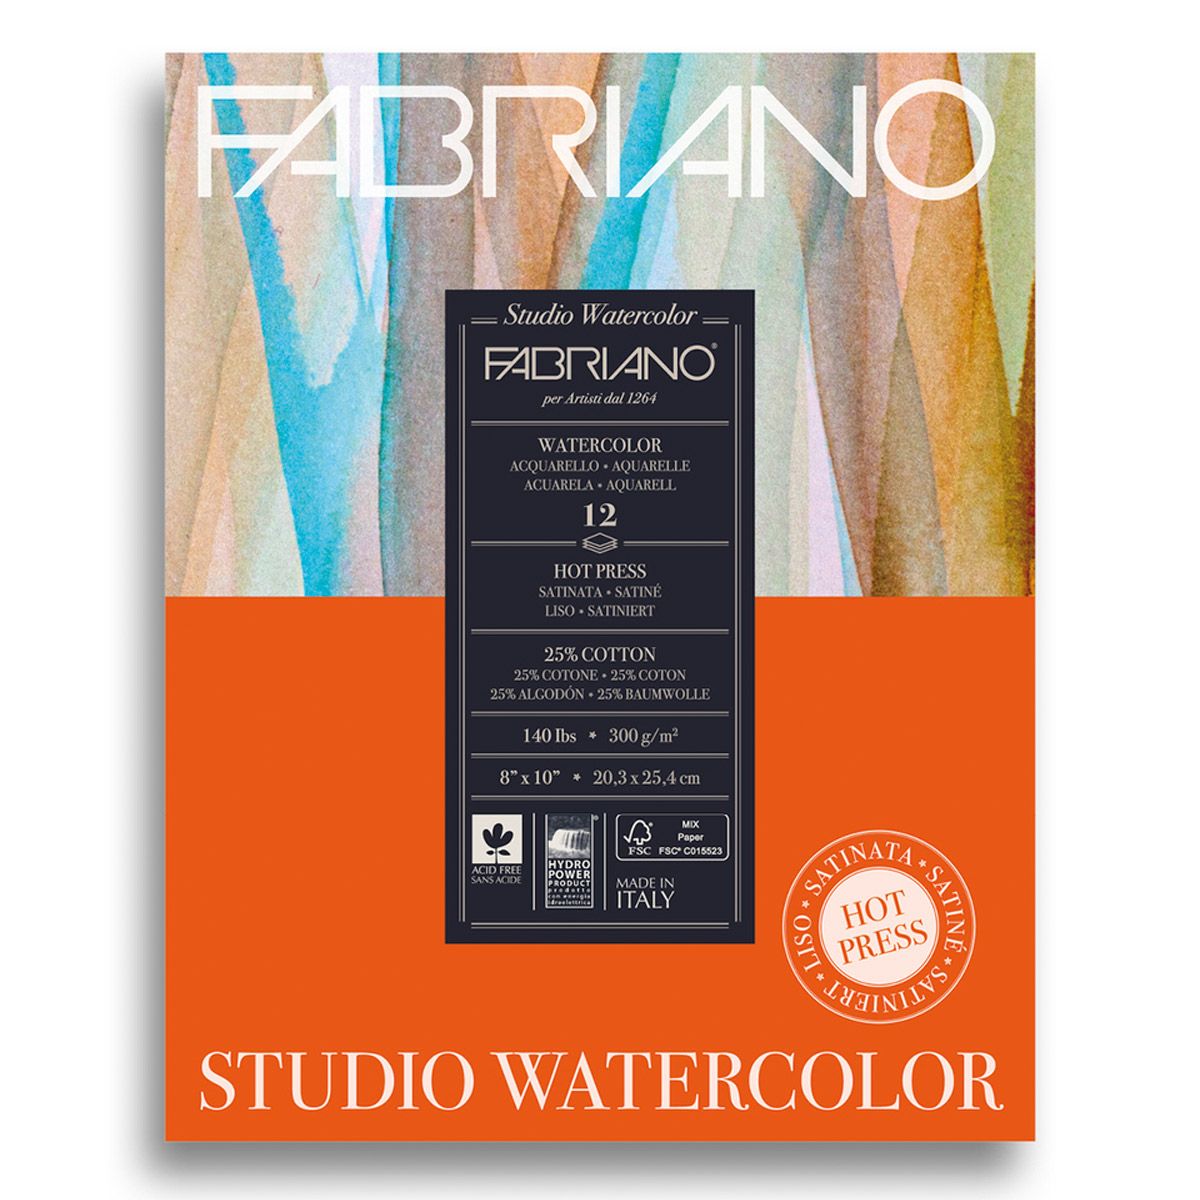 Fabriano Studio Watercolour Pad HP-20 sheets, 140lb 8x10 inch